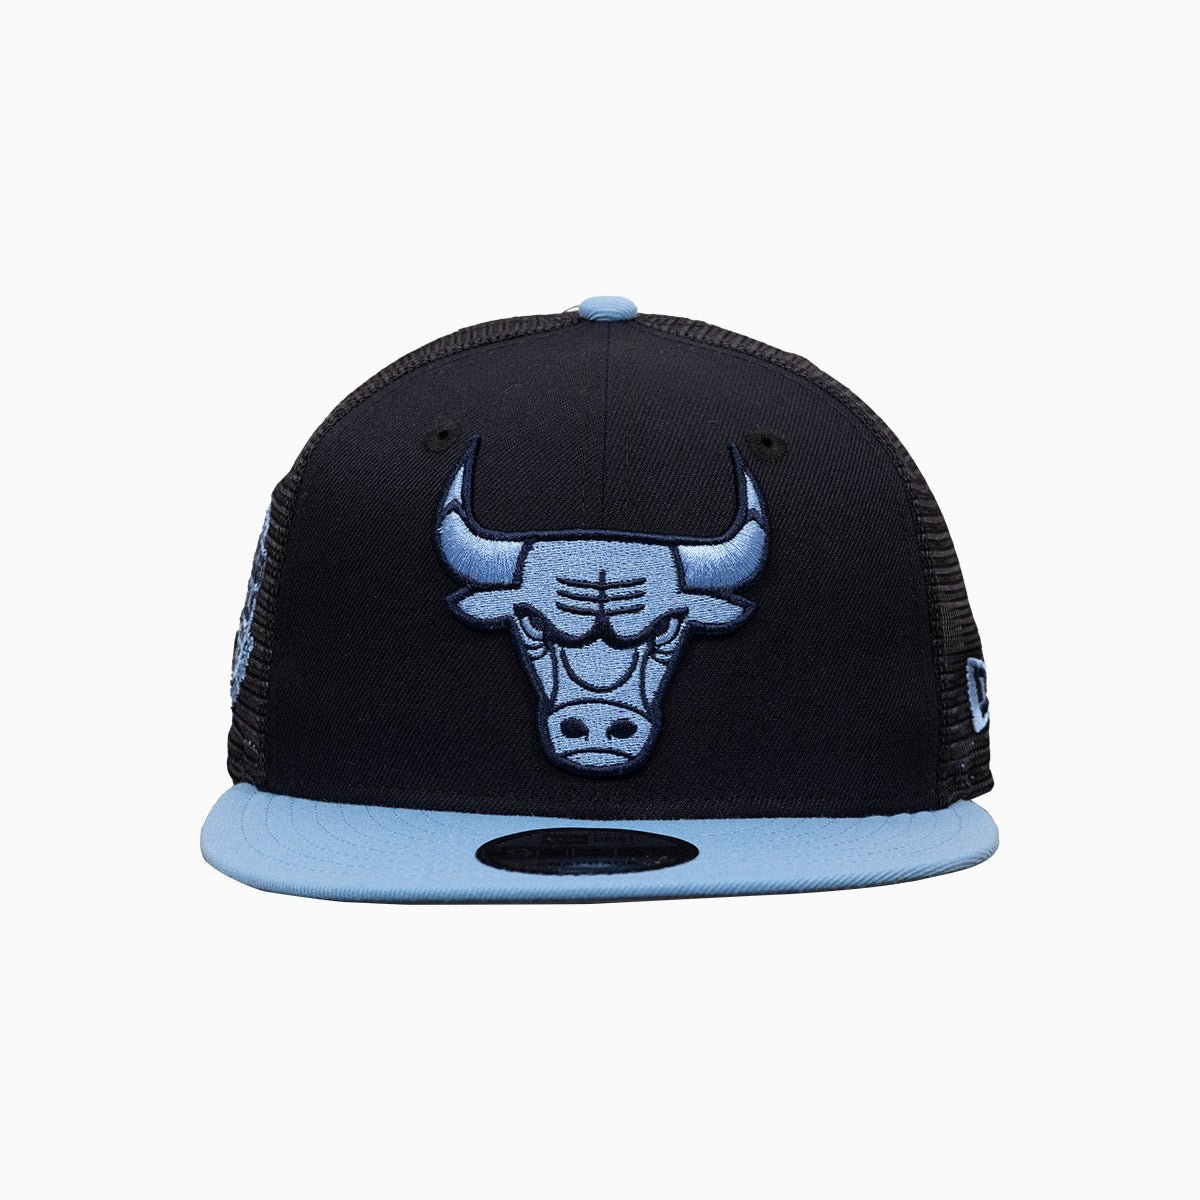 New Era Chicago Bulls 6X World Champions NBA 9FIFTY Snapback Hat